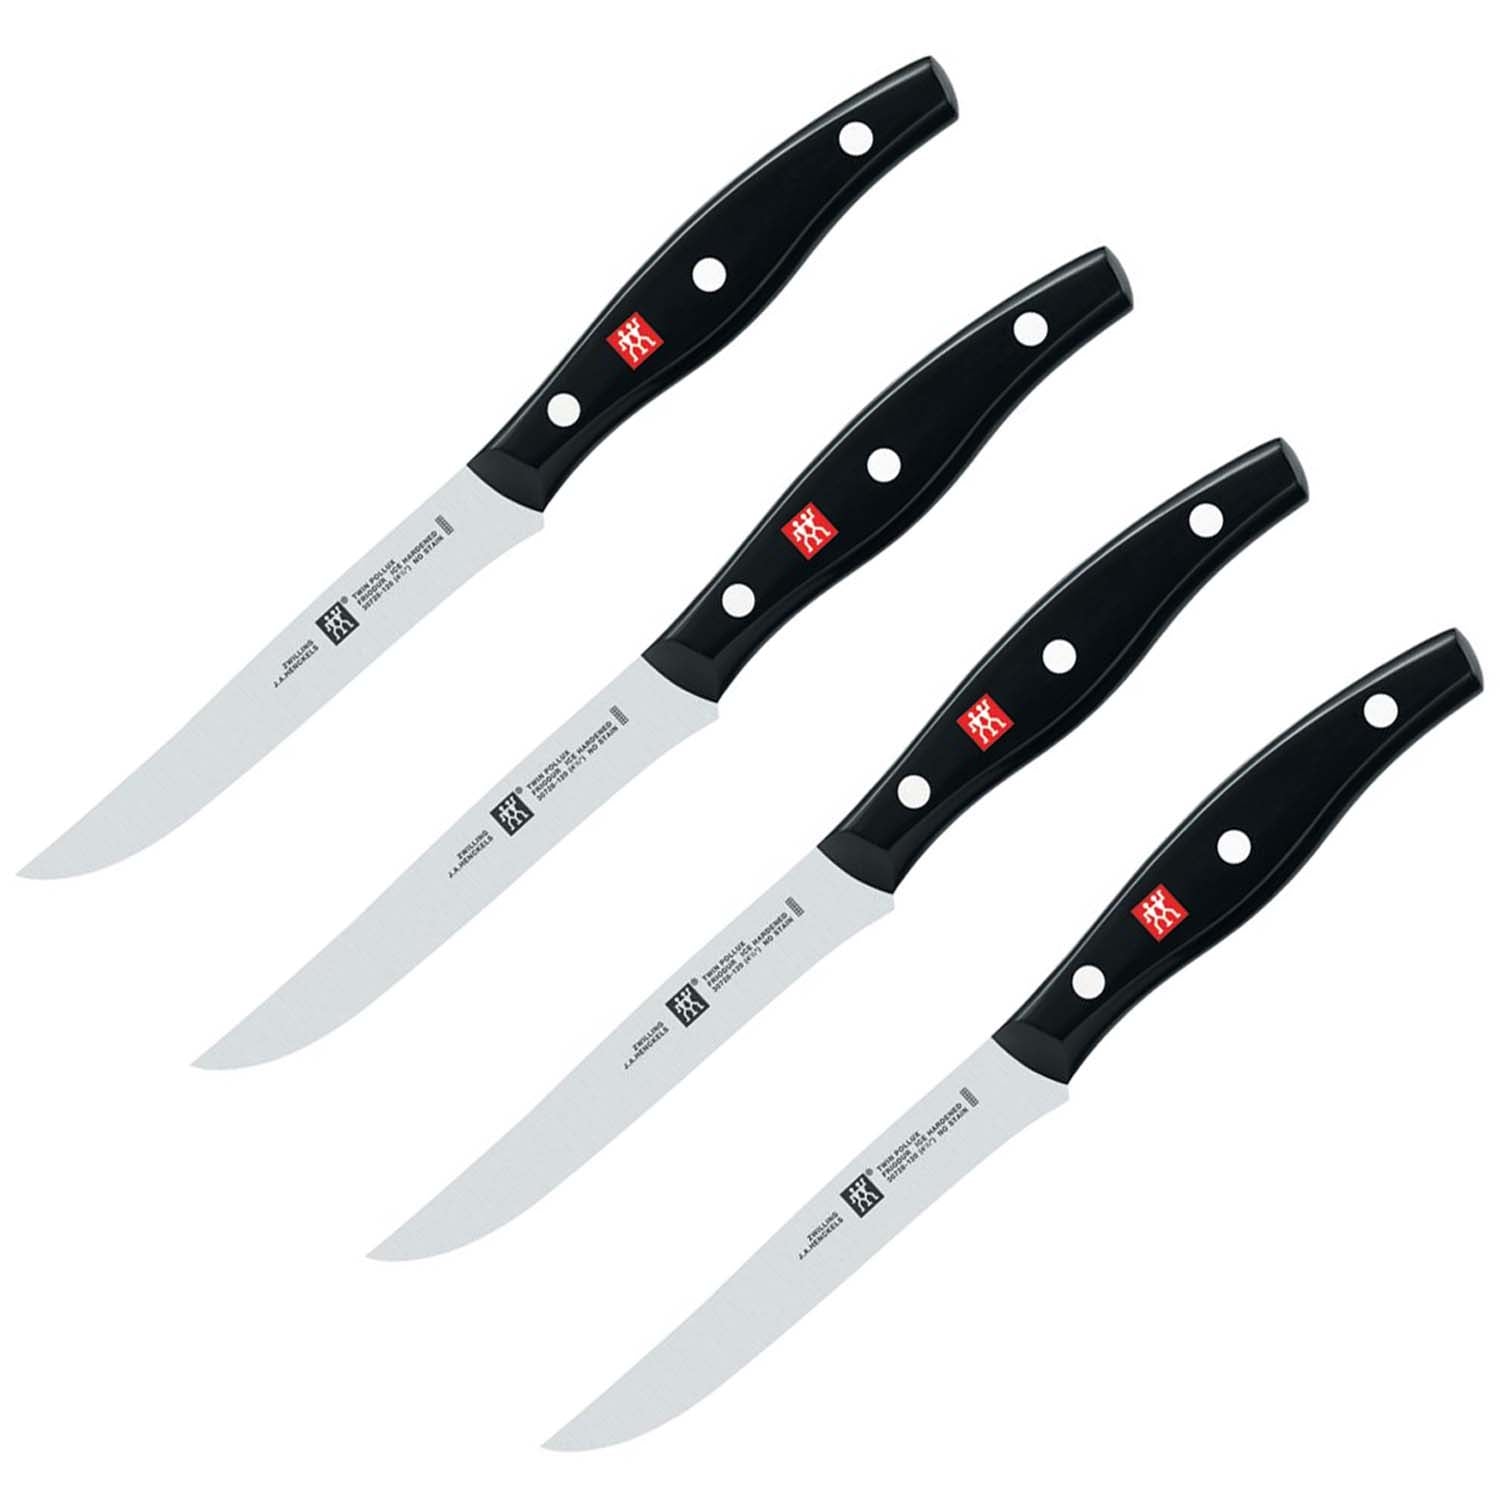 Buy ZWILLING TWIN Signature Knife block set